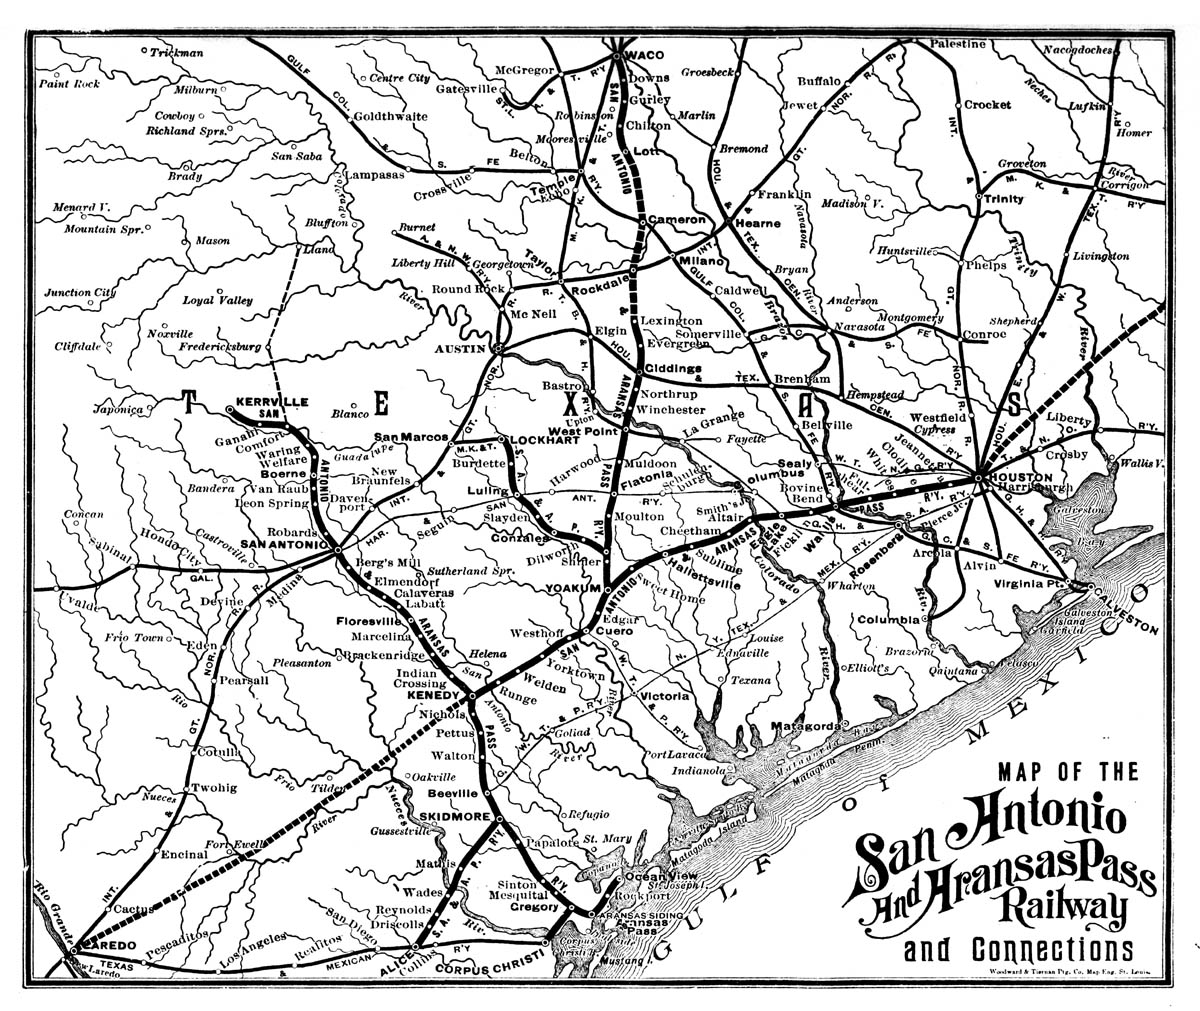 San Antonio & Aransas Pass Railway, Station Reference Map Showing Route circa 1905-1910.